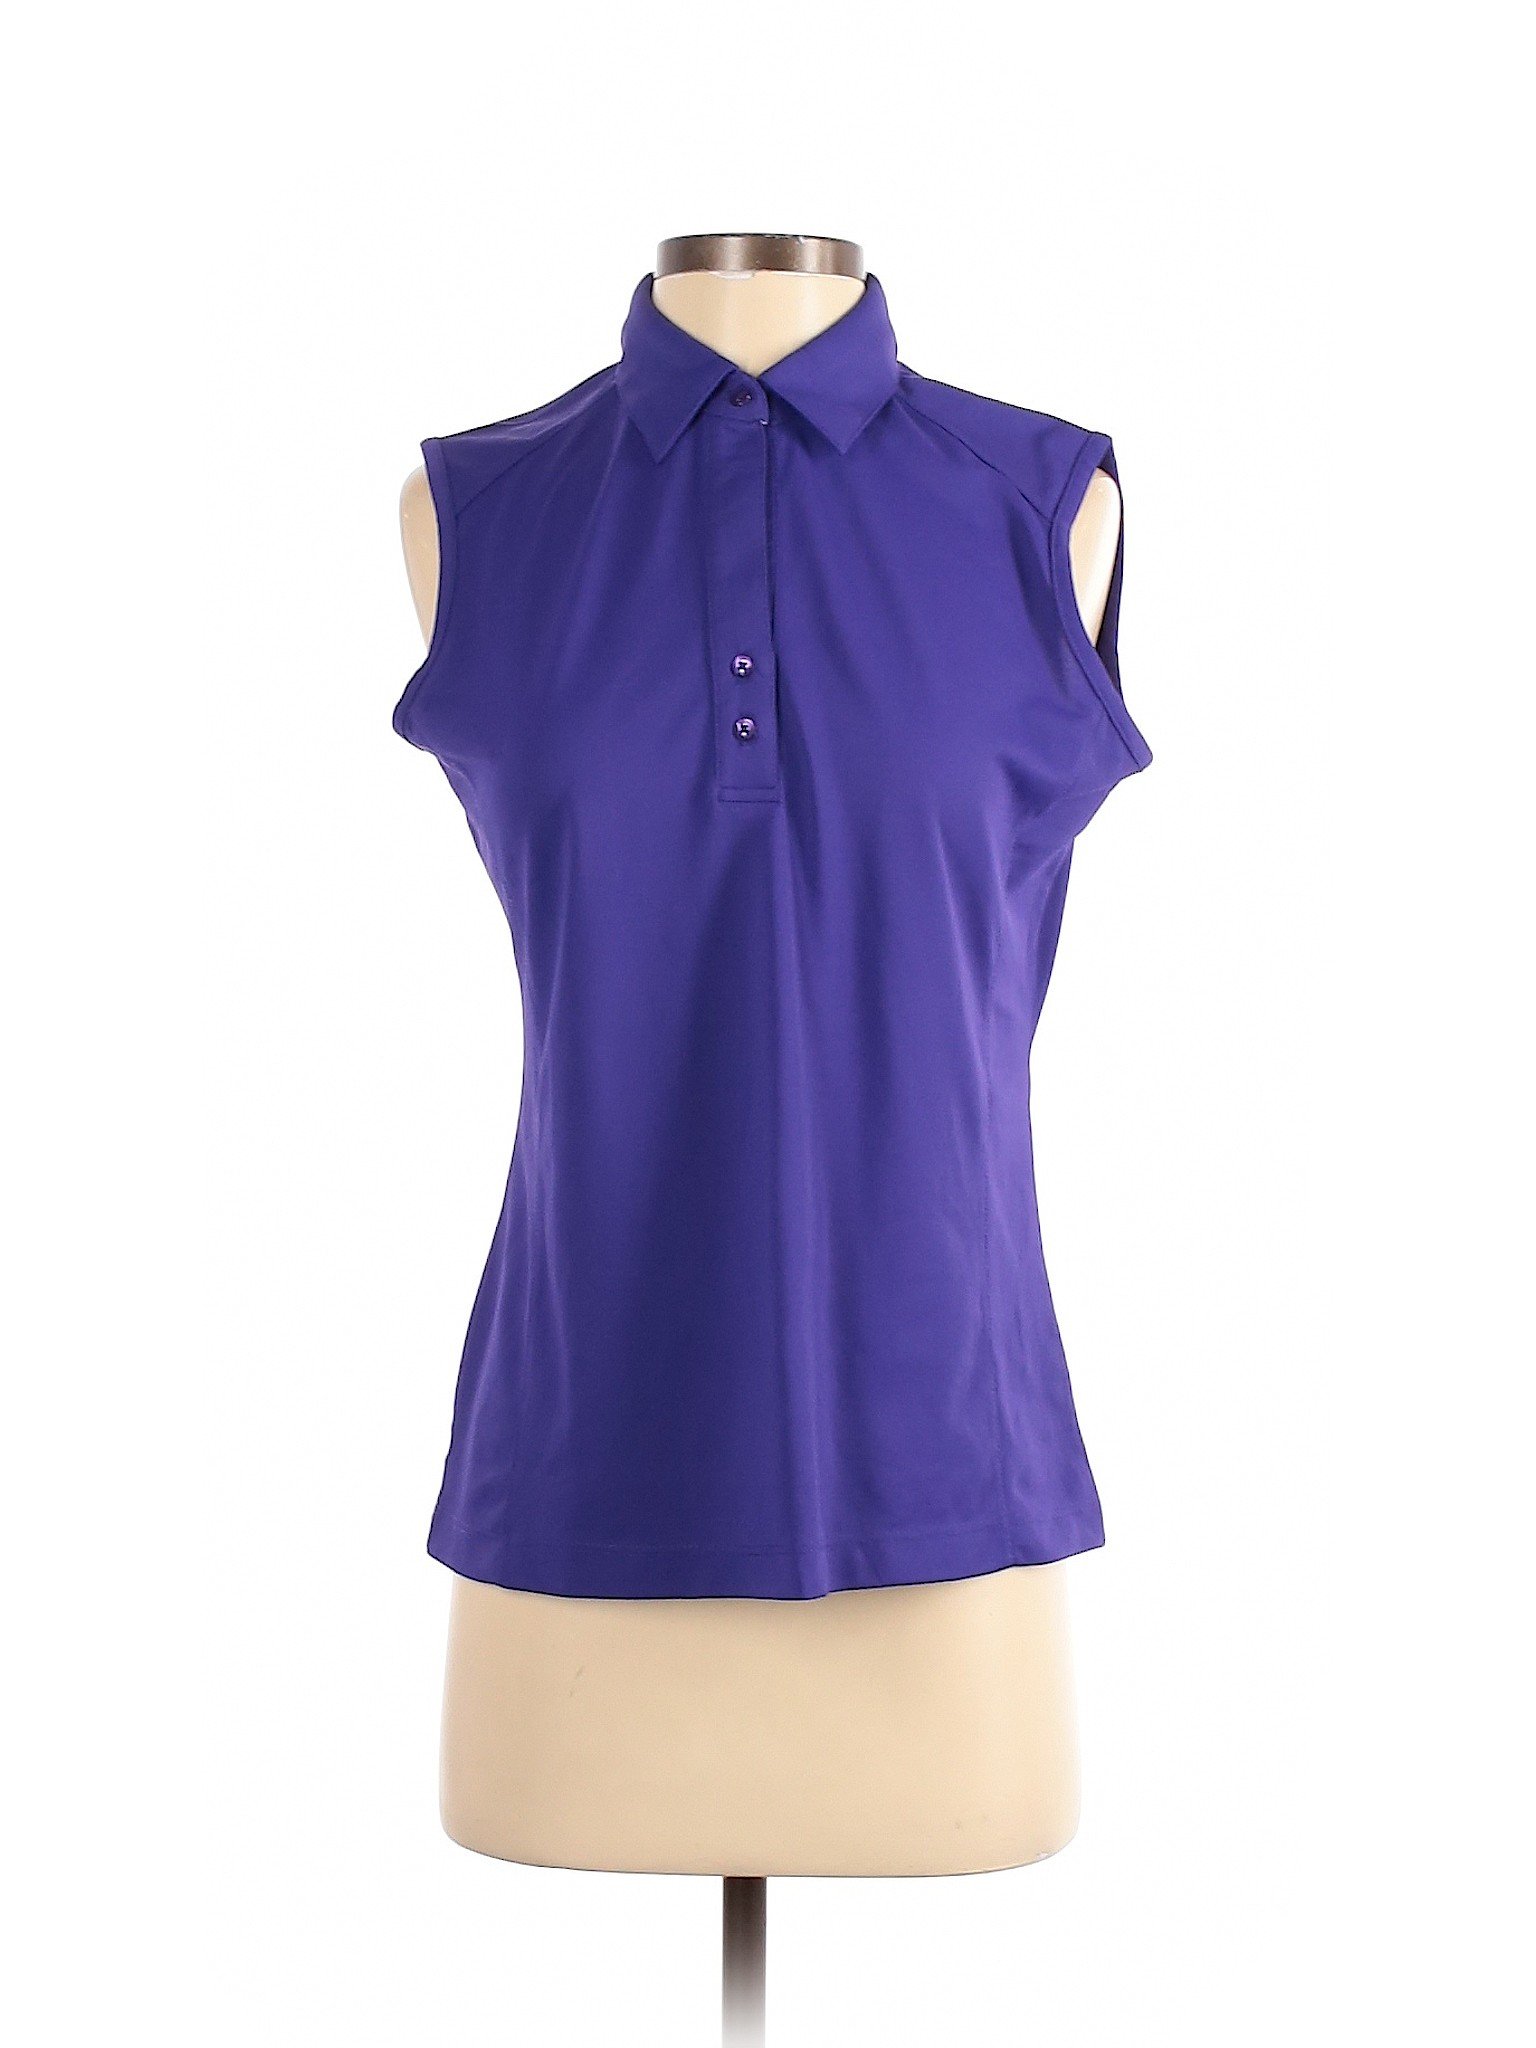 Assorted Brands Women Purple Sleeveless Polo S | eBay